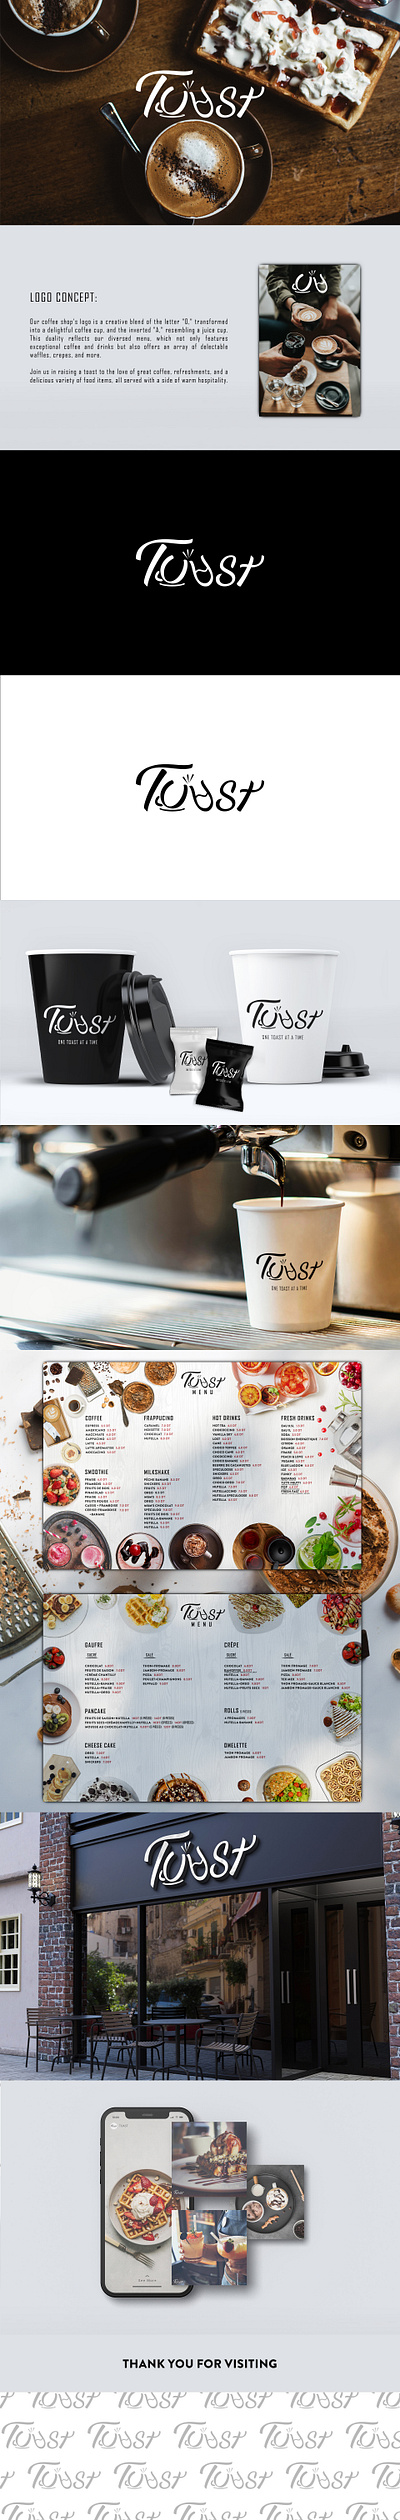 TOAST | COFFEE SHOP BRANDING branding graphic design logo visual identity